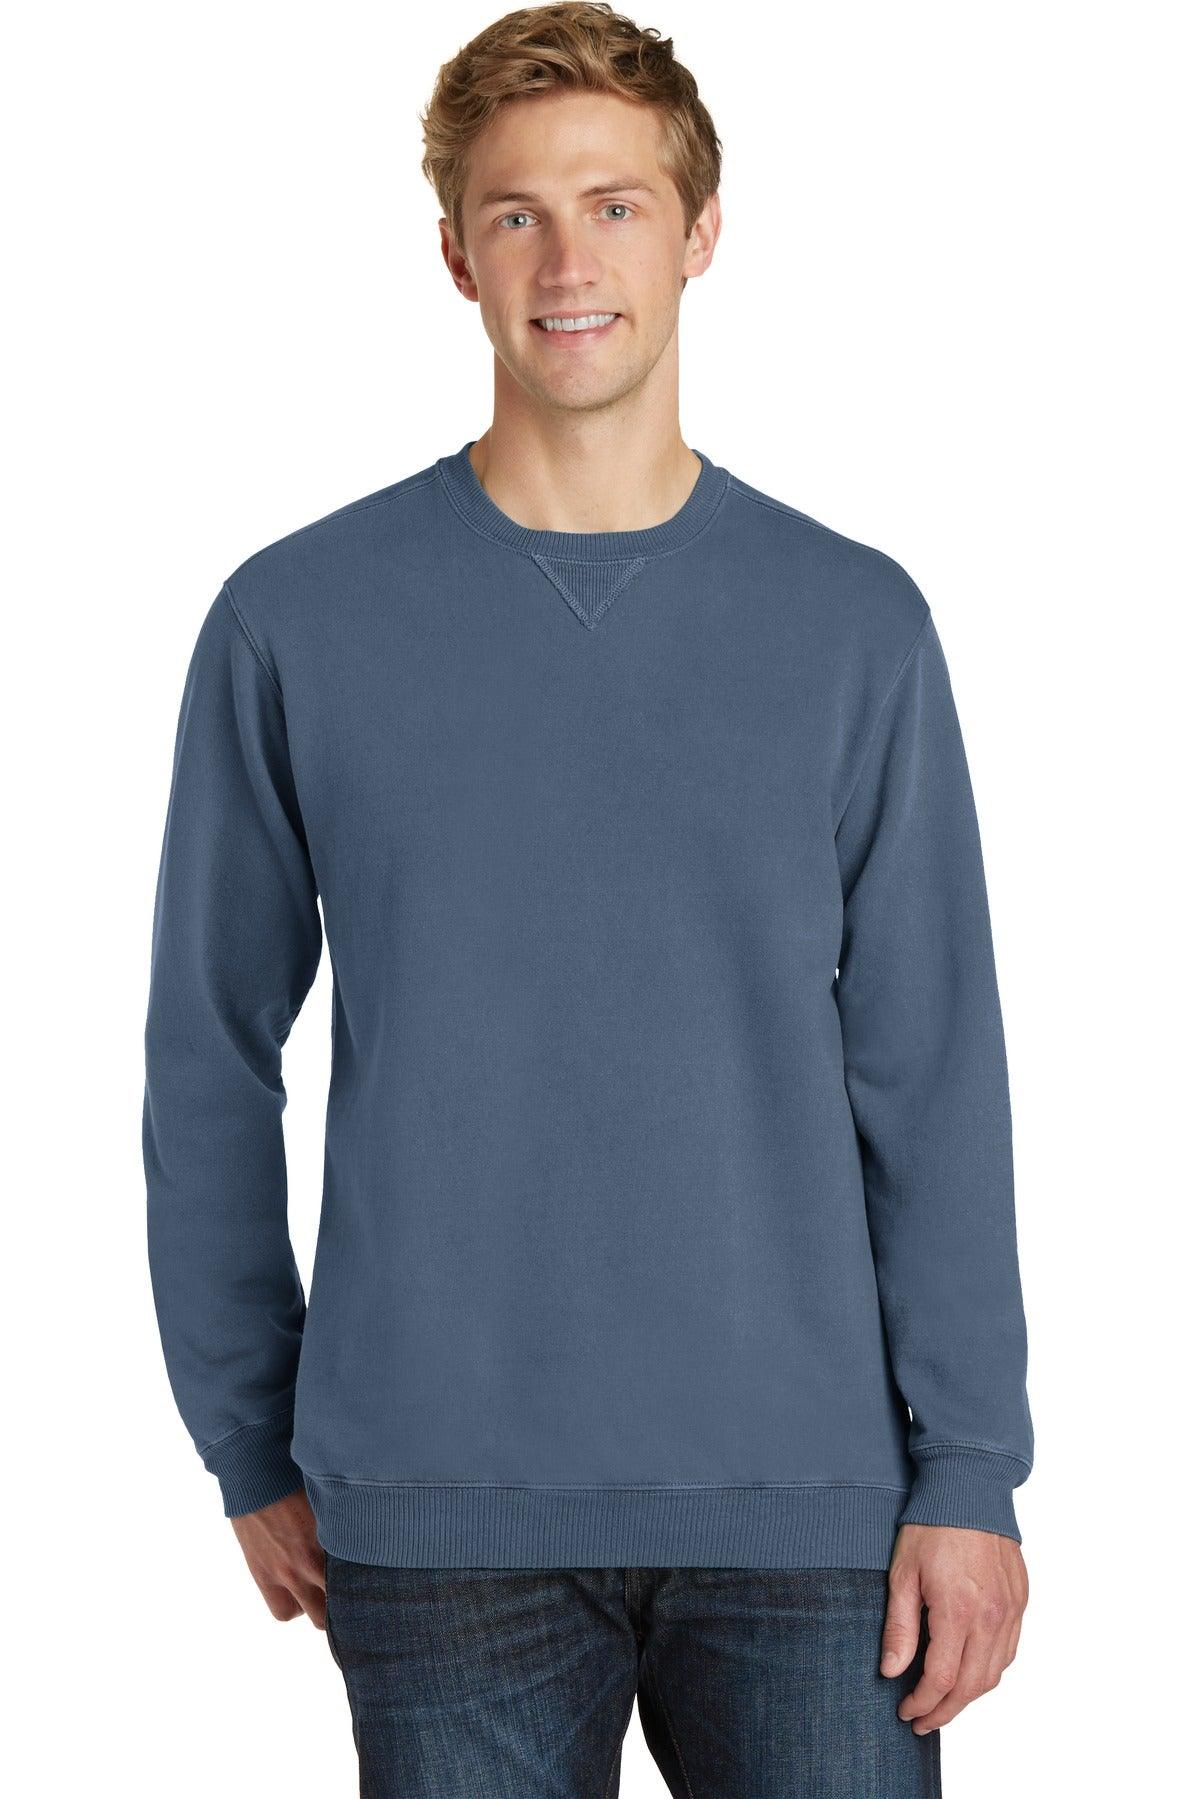 Port & Company Beach Wash Garment-Dyed Sweatshirt PC098 - Dresses Max